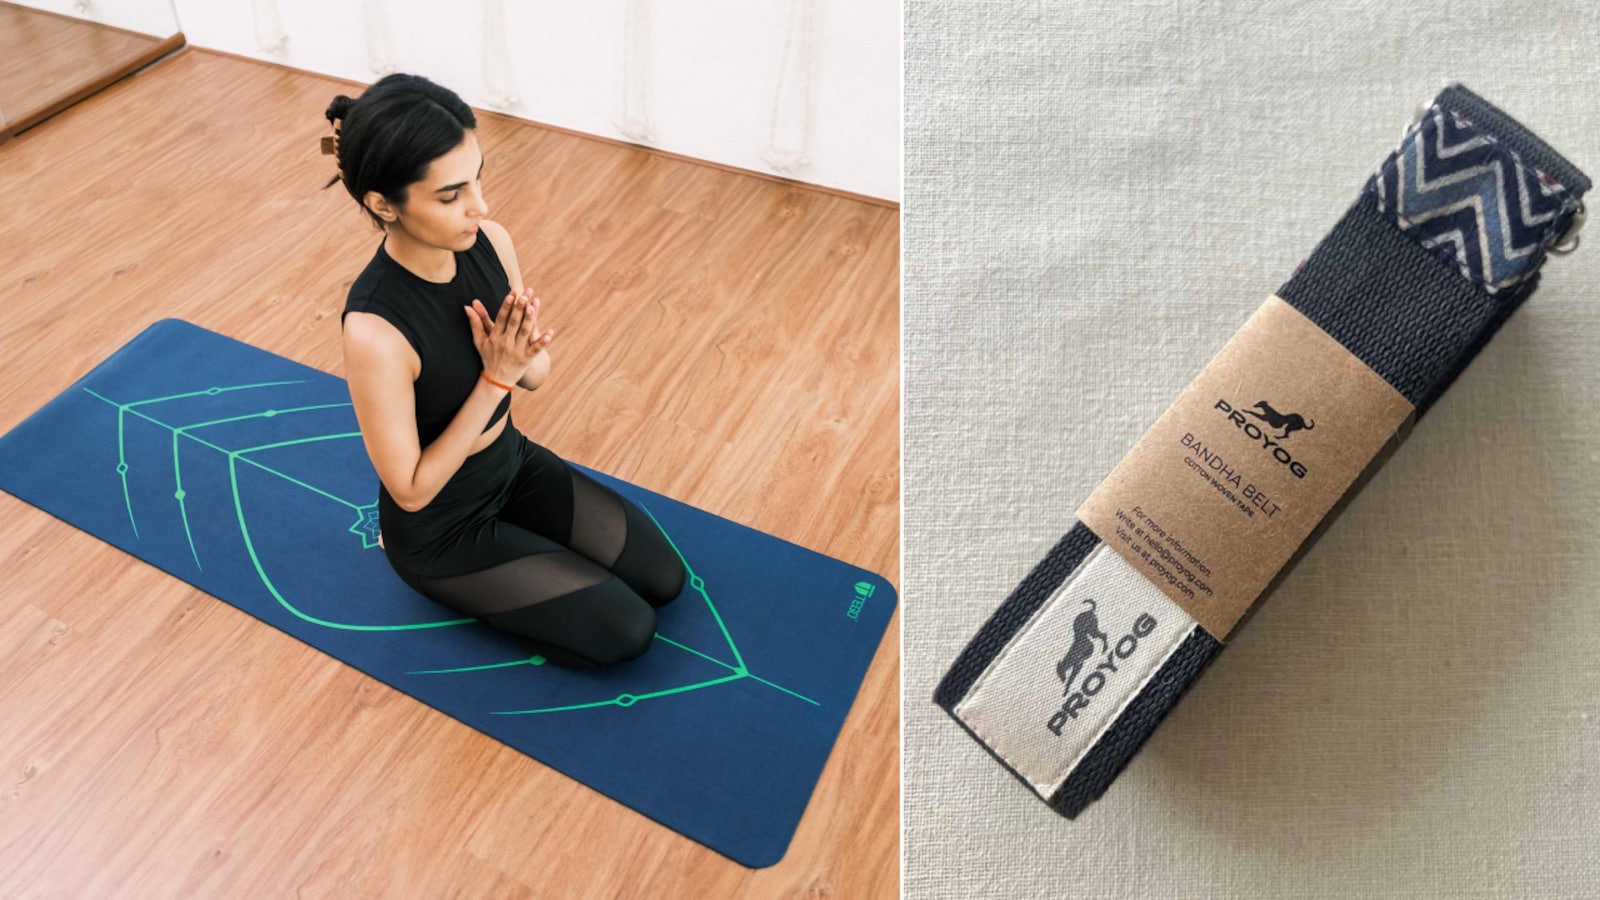 Exercise & fitness yoga mat, PVC, rubber, TPE